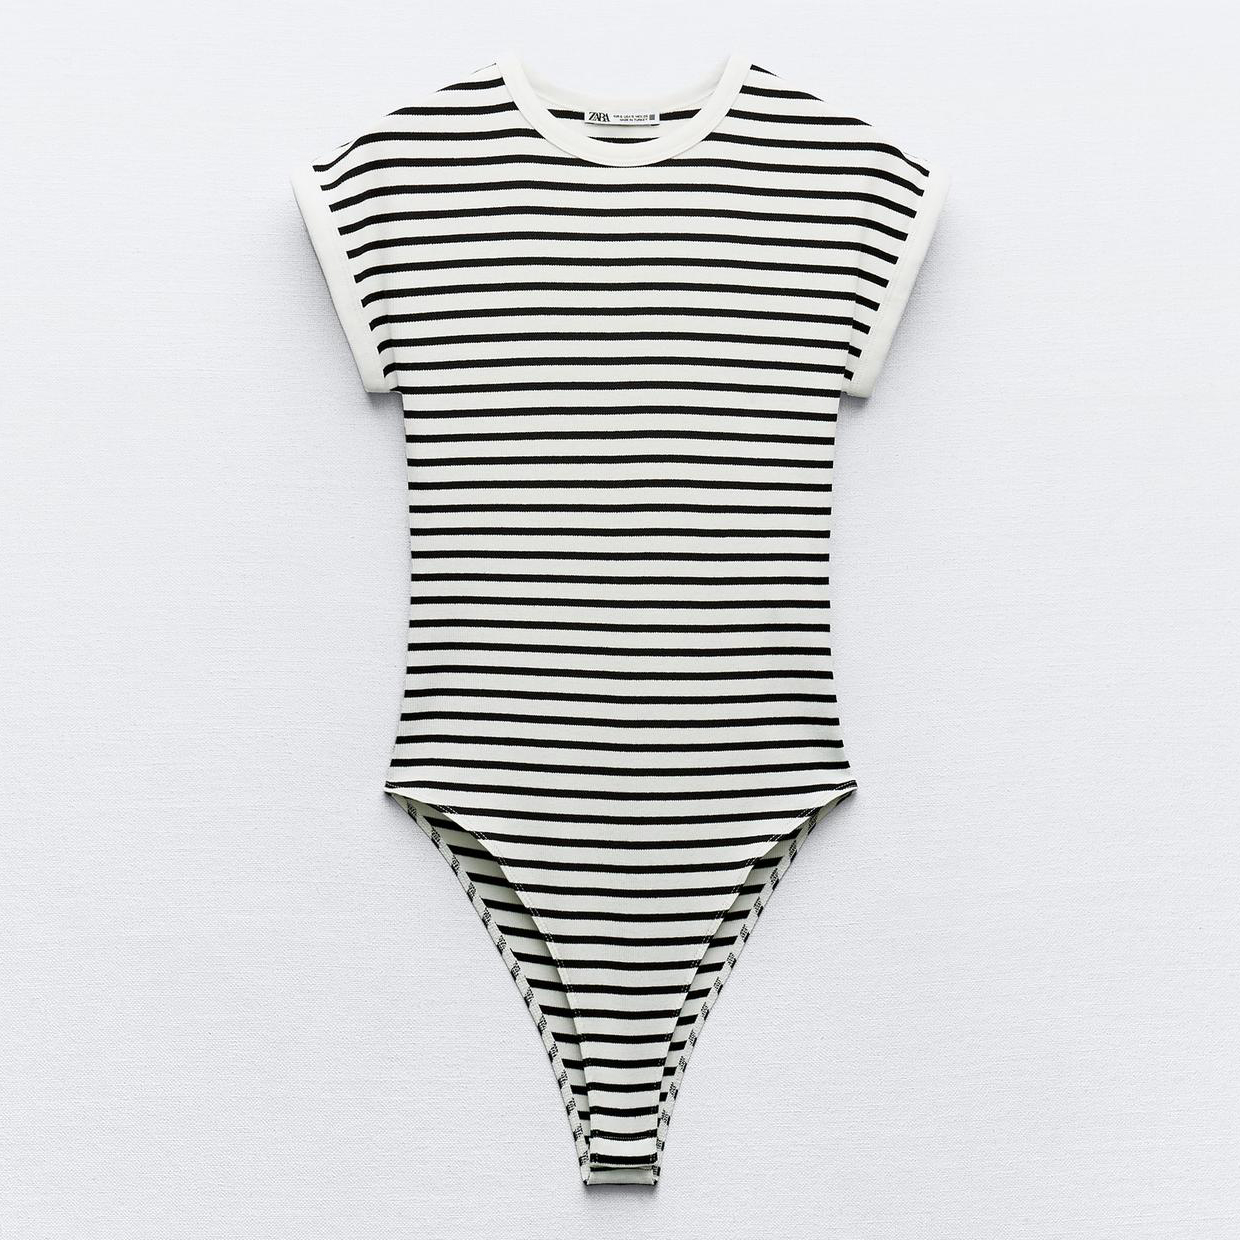 Боди-комбинезон Zara Striped Ribbed, черный/белый футболка zara contrast ribbed striped синий белый